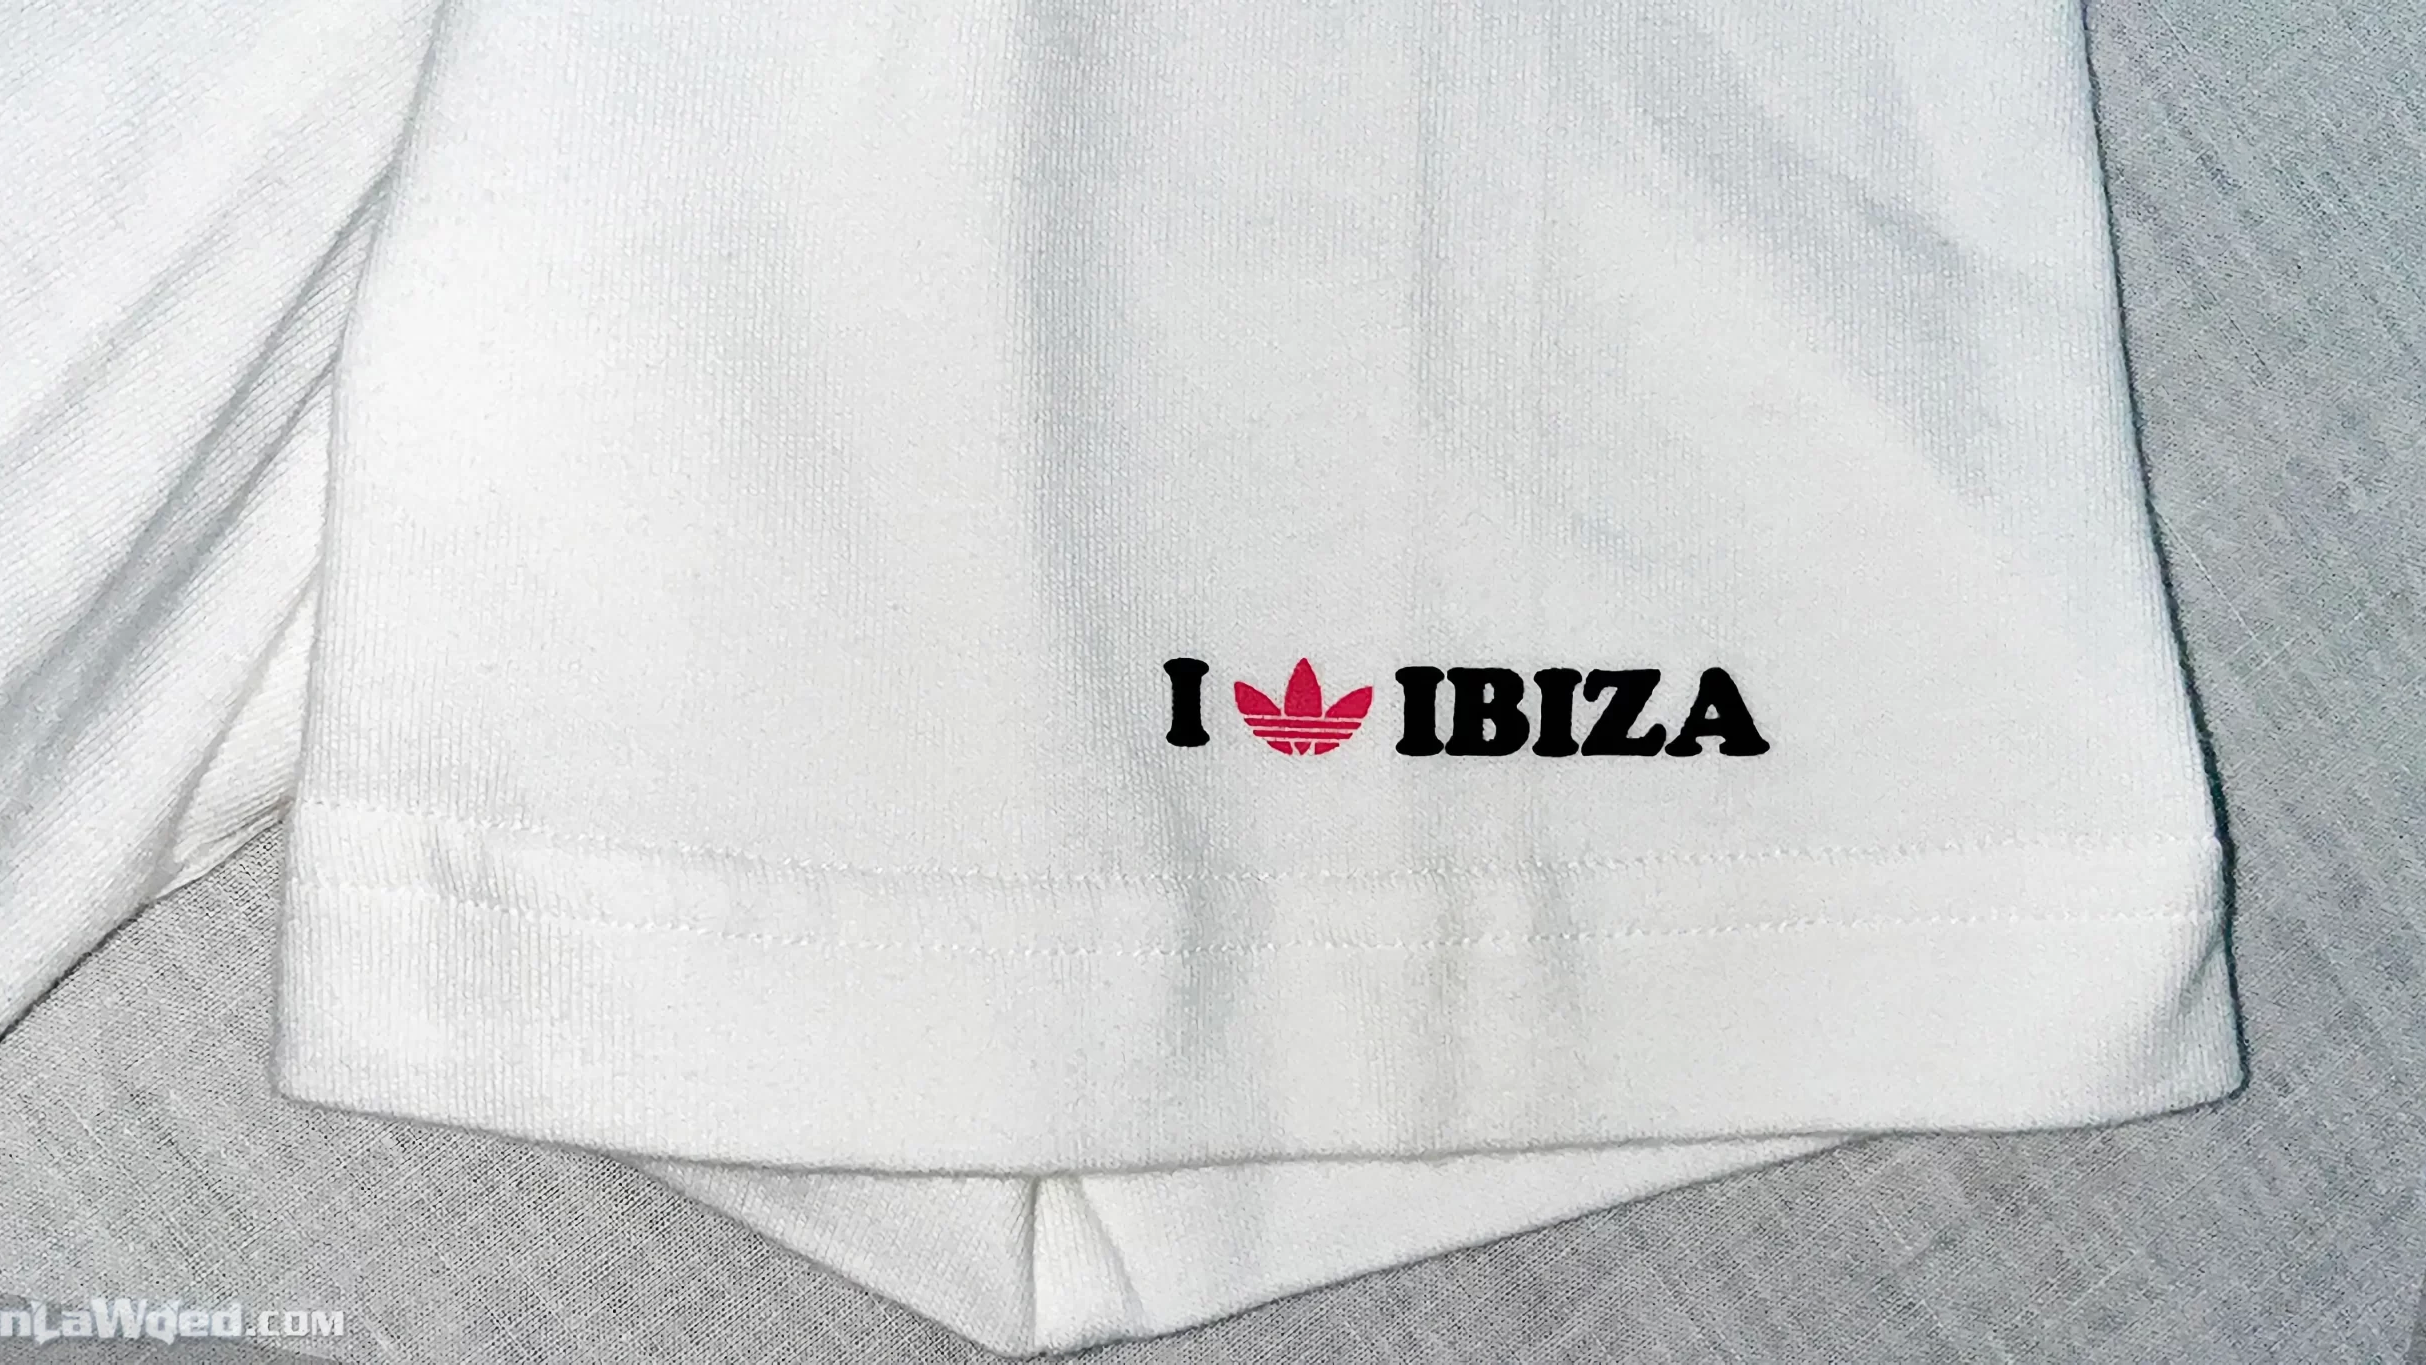 Men’s 2007 Ibiza T-Shirt by Adidas Originals: Ignite (EnLawded.com file #lmc5p6cz9owrface)